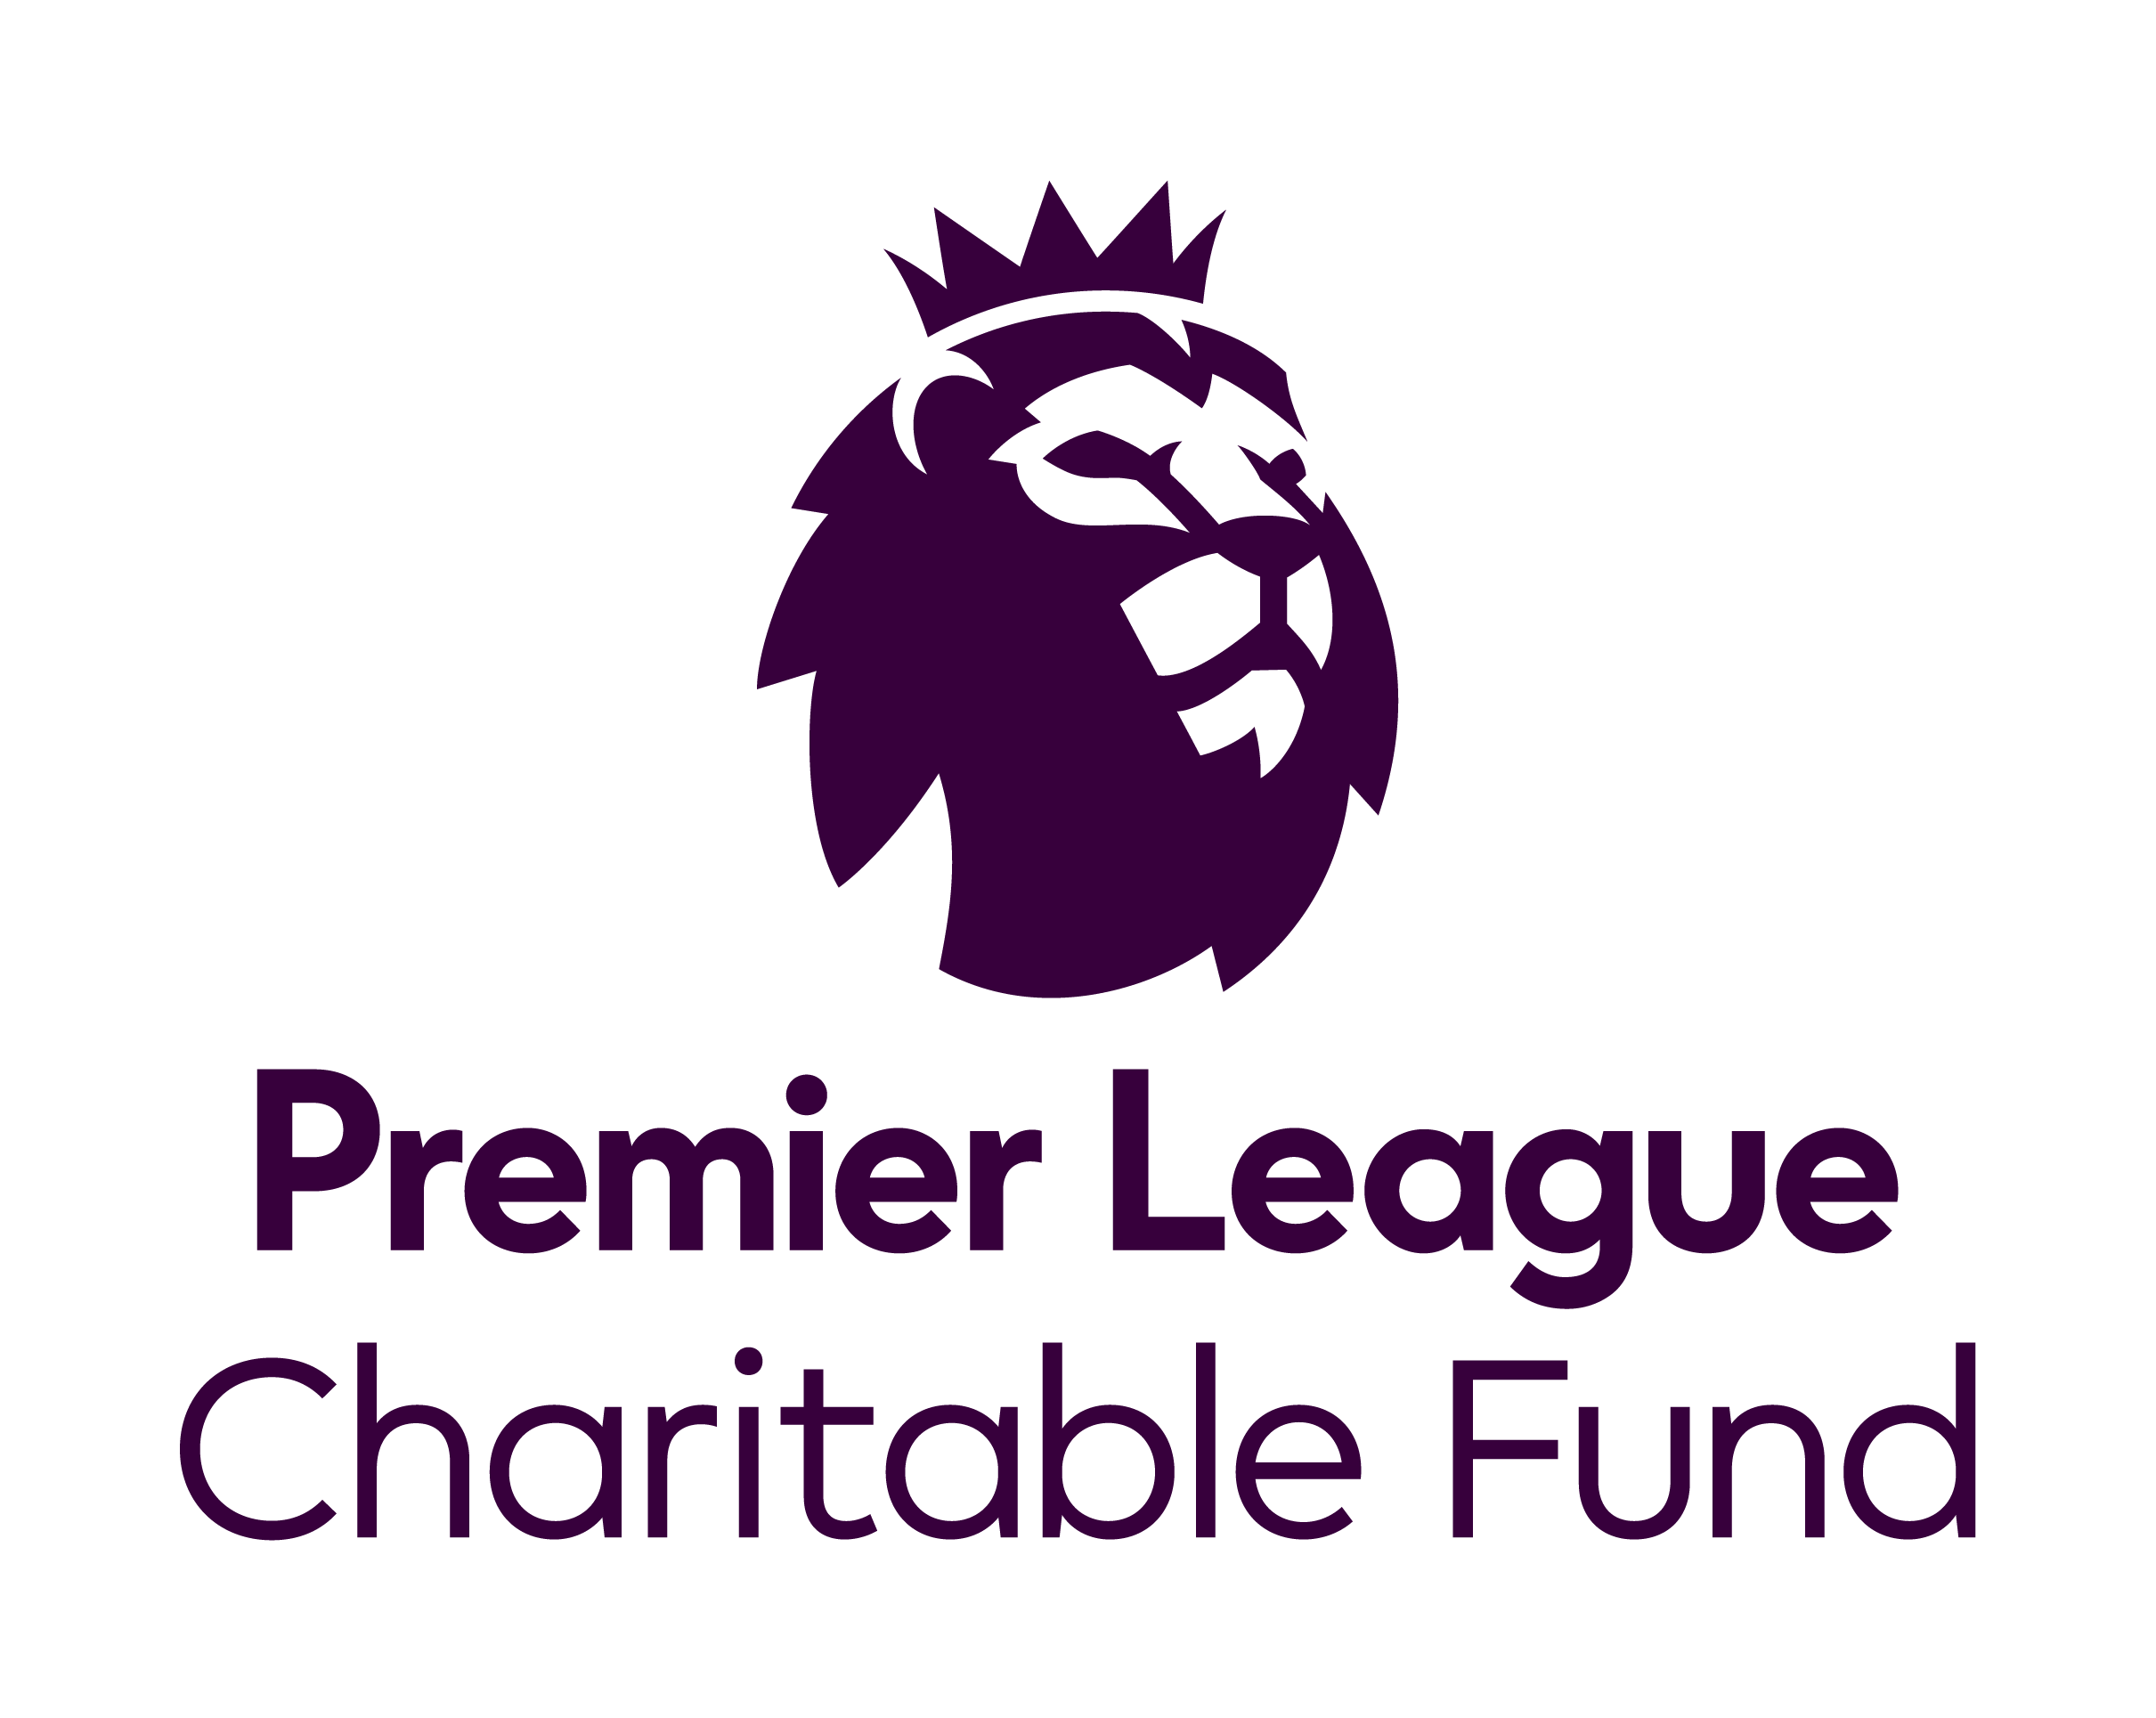 Link to https://www.premierleague.com/footballandcommunity/premier-league-charitable-fund